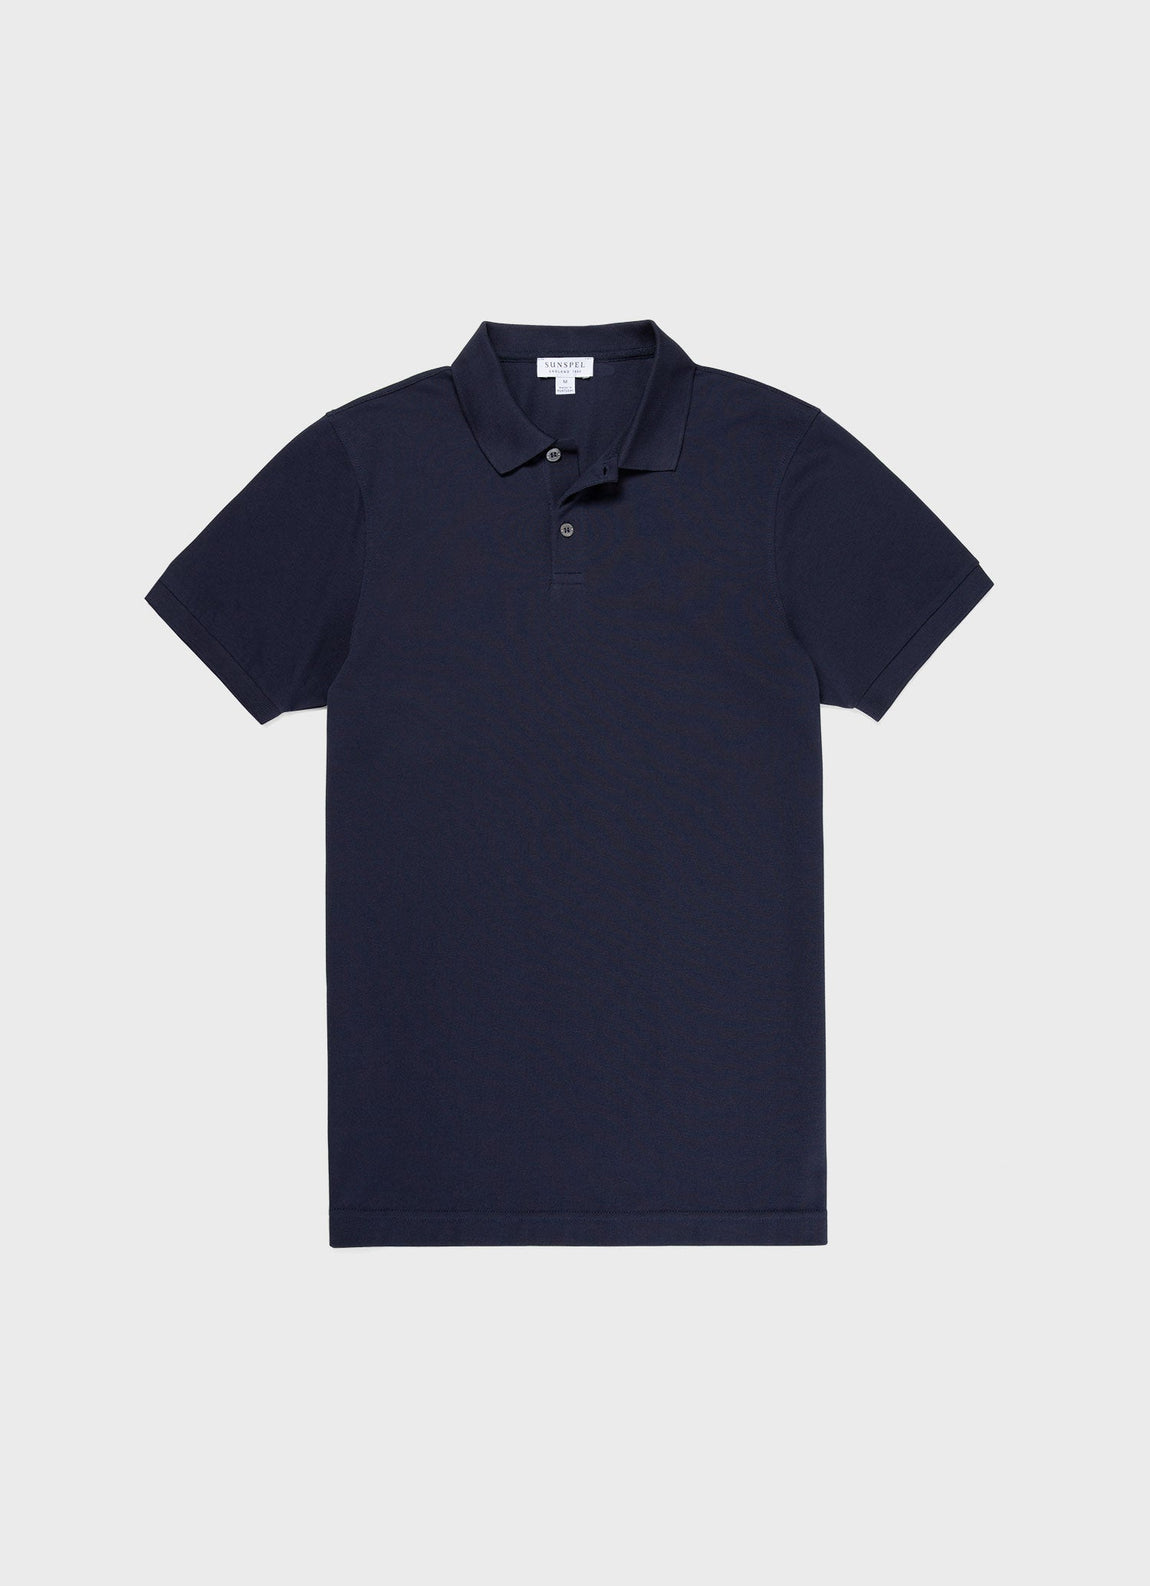 Men's Piqué Polo Shirt in Navy | Sunspel